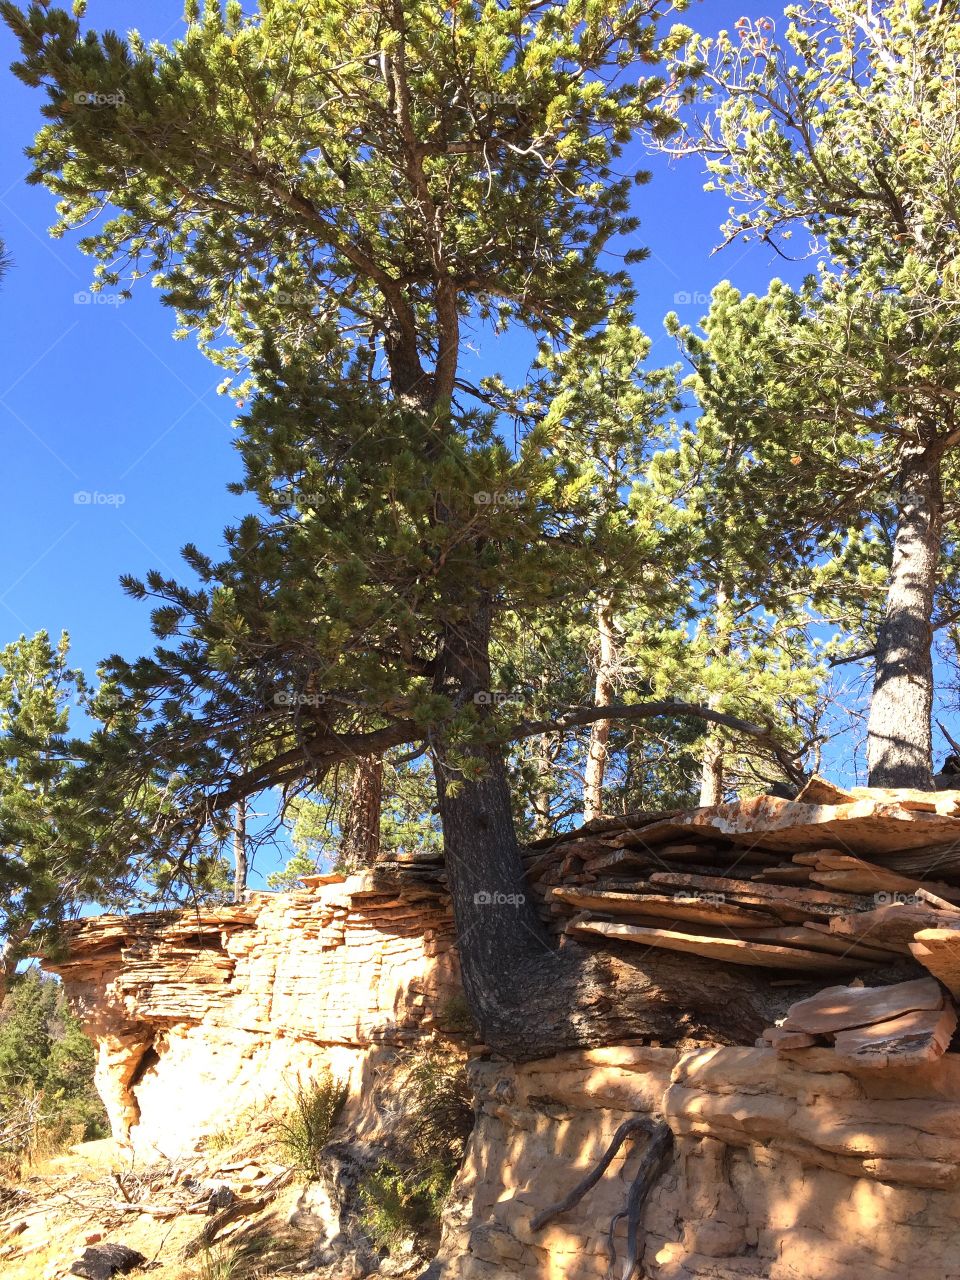 Big Tree Big Rock. Huge pine tree growing out of rock on a mountain 